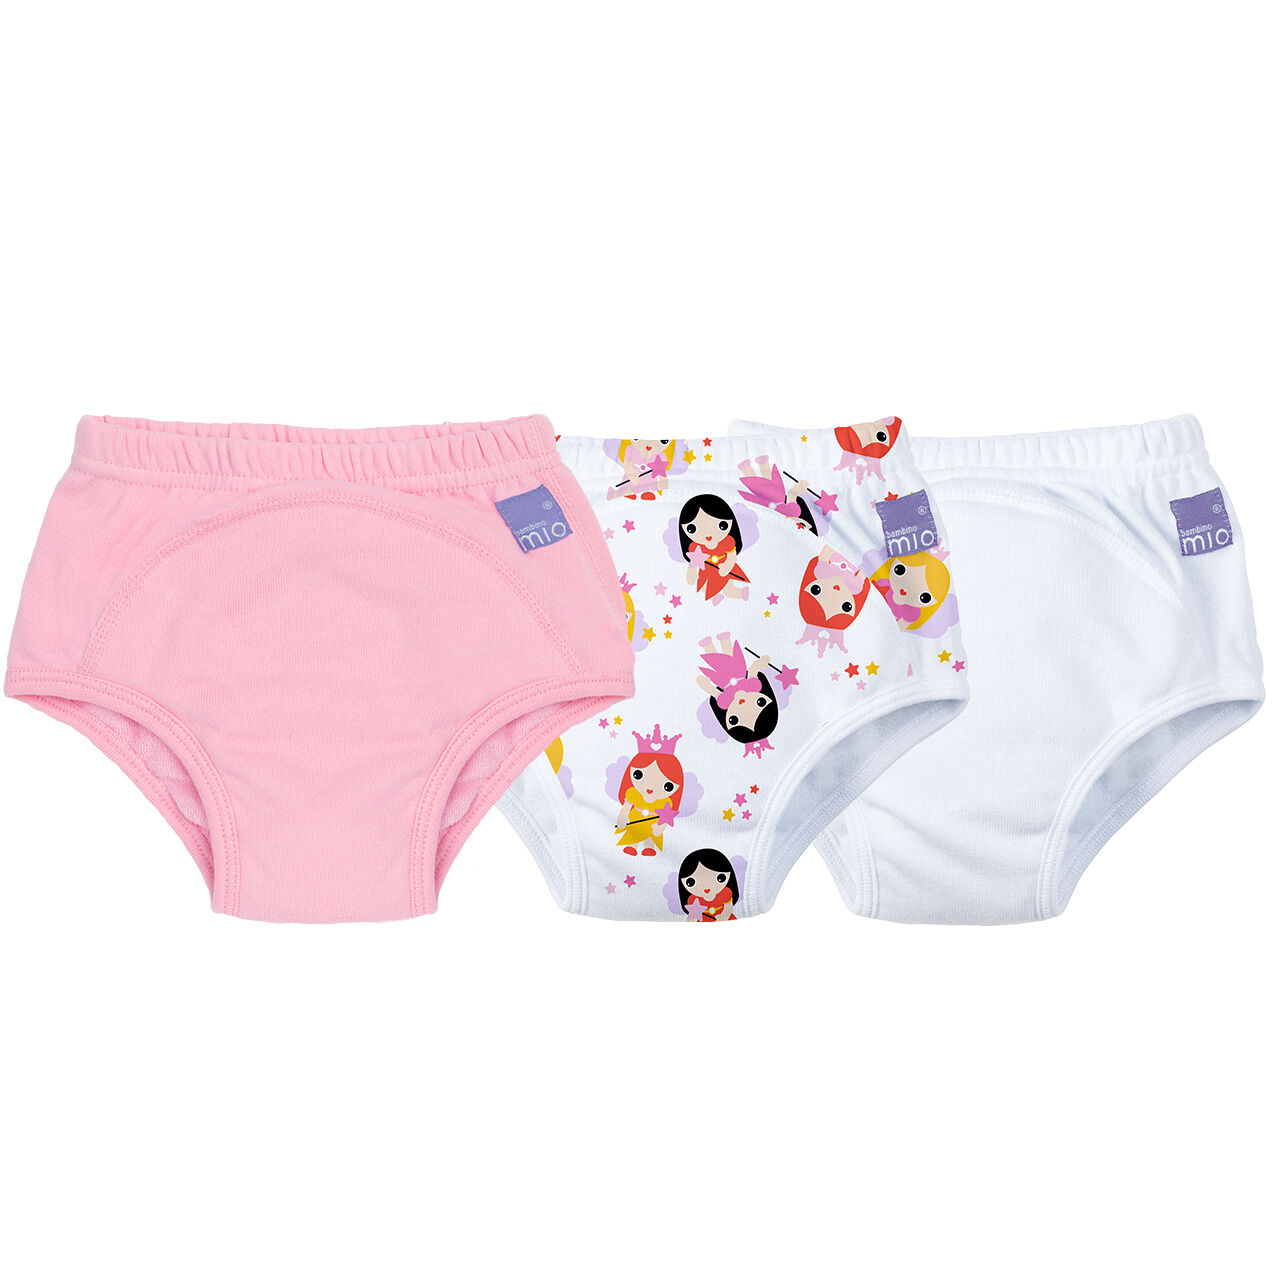 Bambino Mio Potty Training Pants Girl 18-24 Months 3 Pack